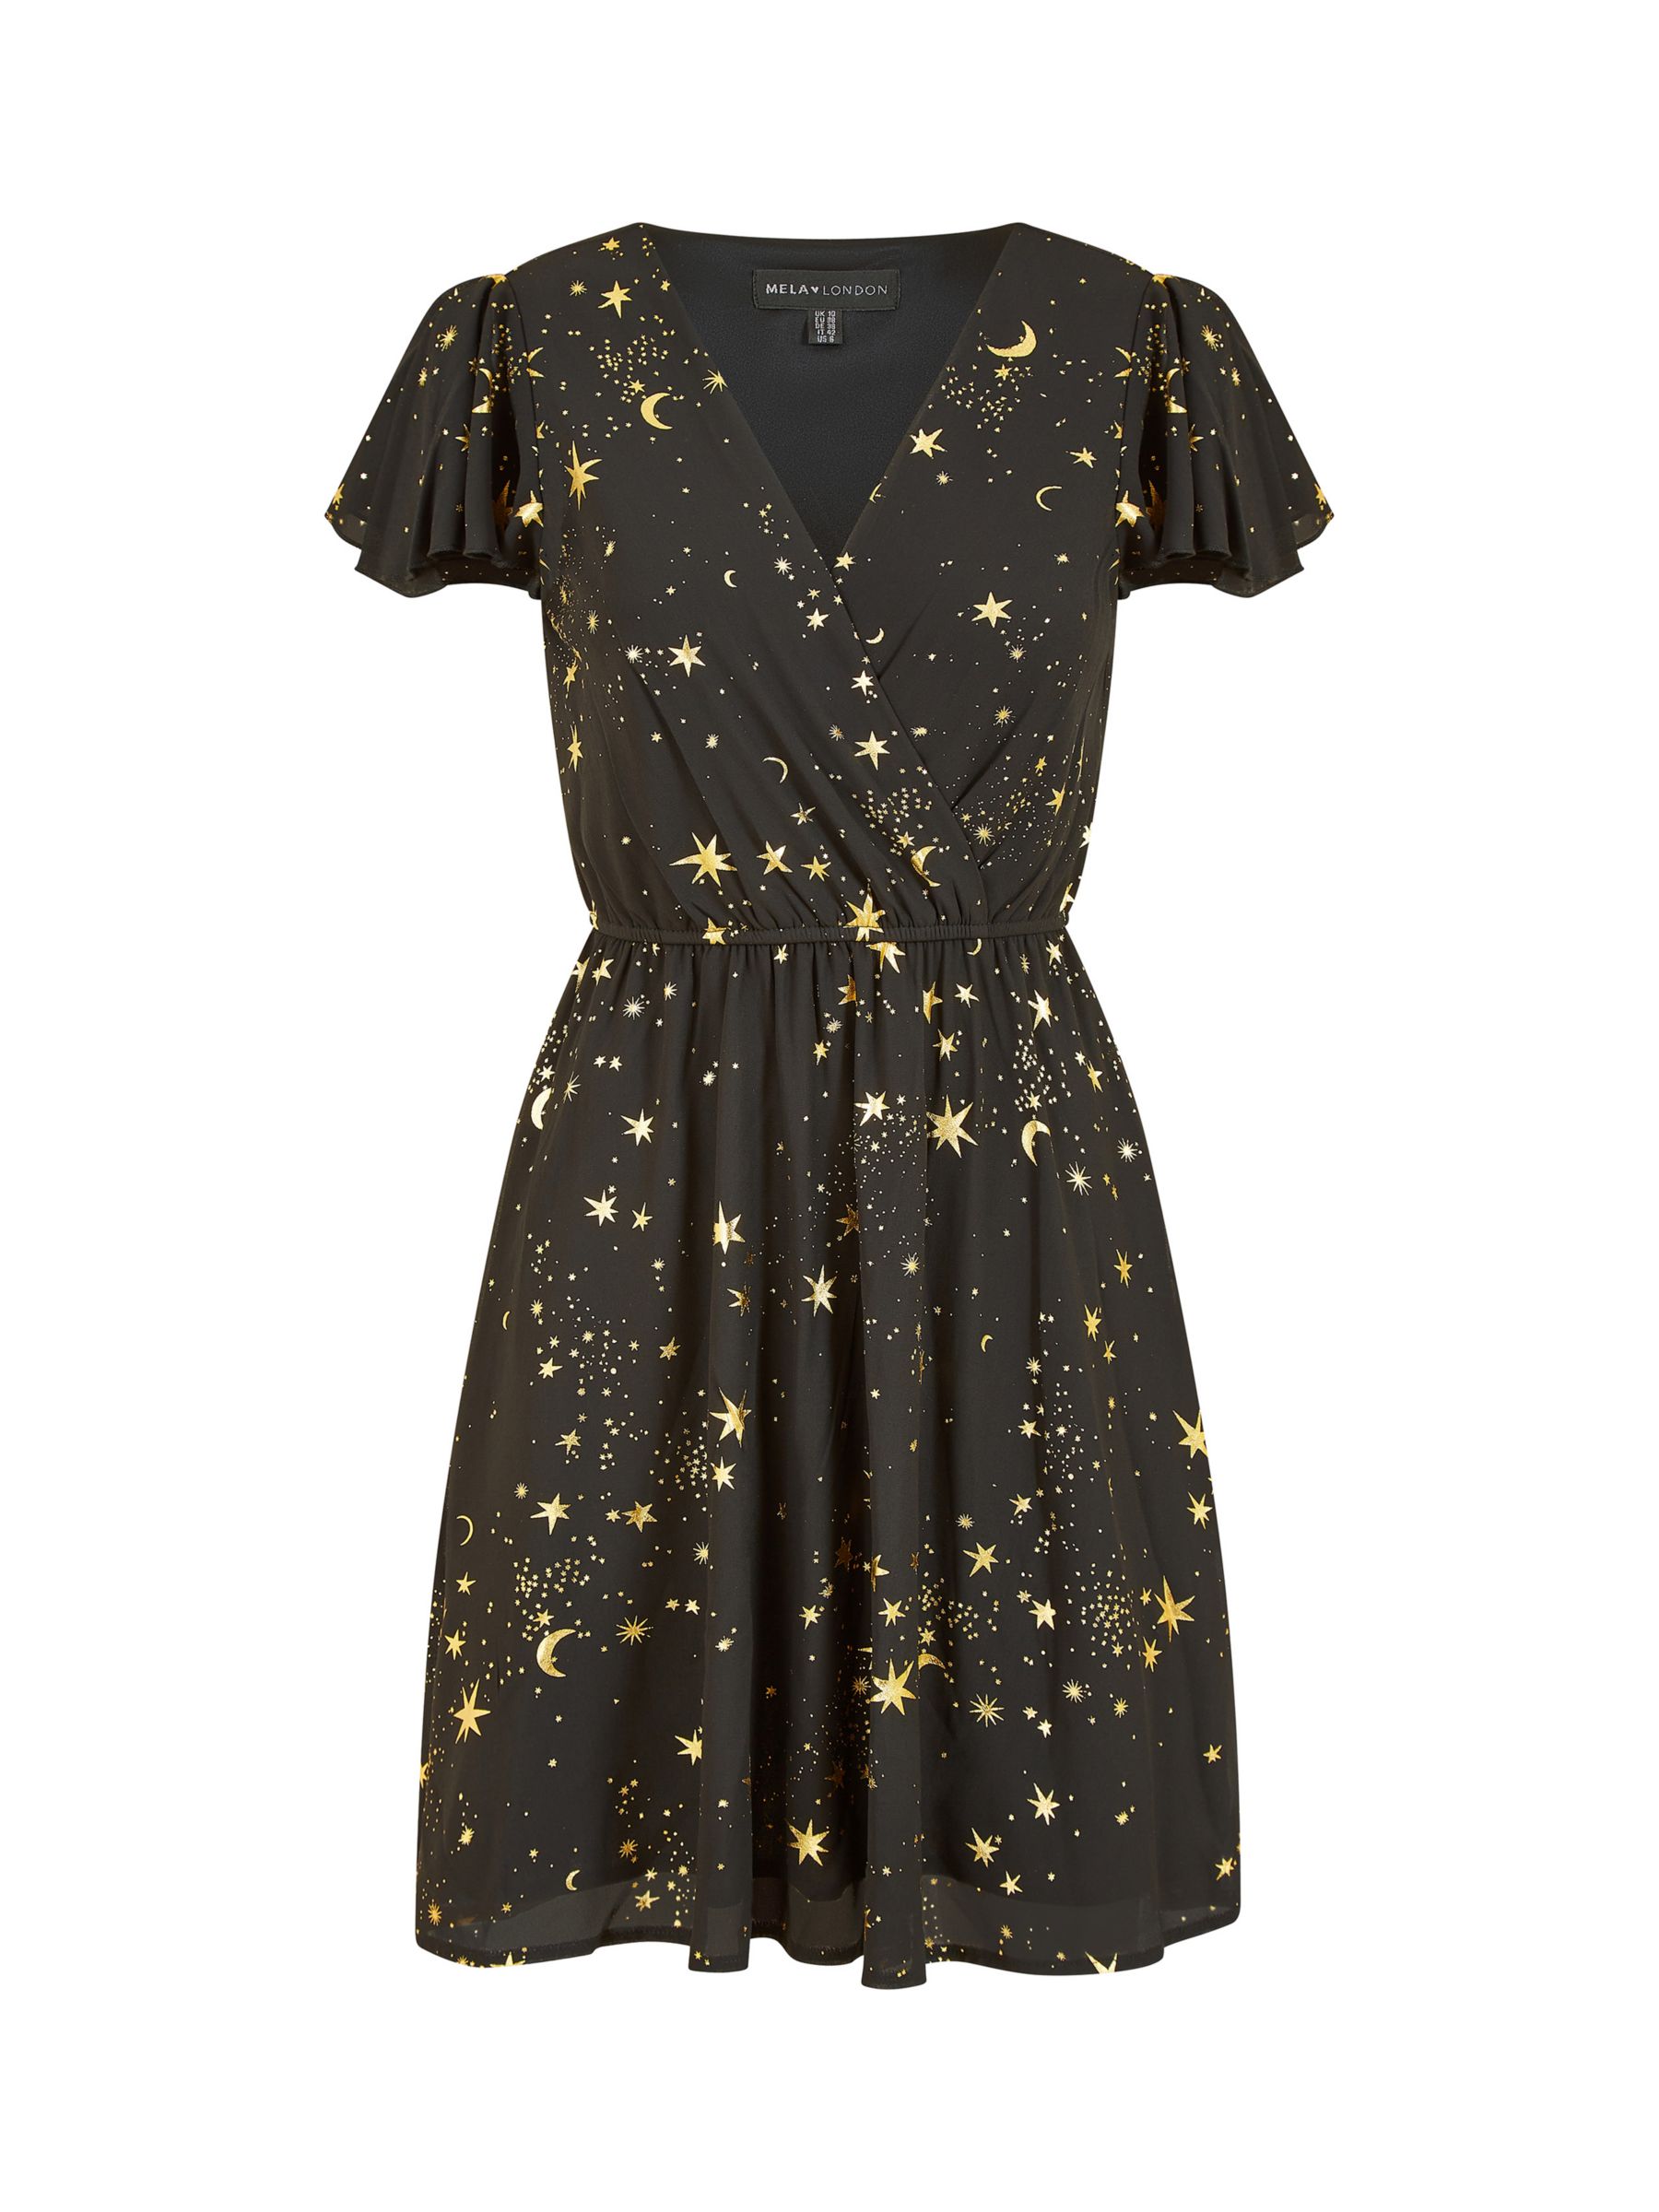 Yumi Mela London Foil Star Print Wrap Skater Dress, Black, 10